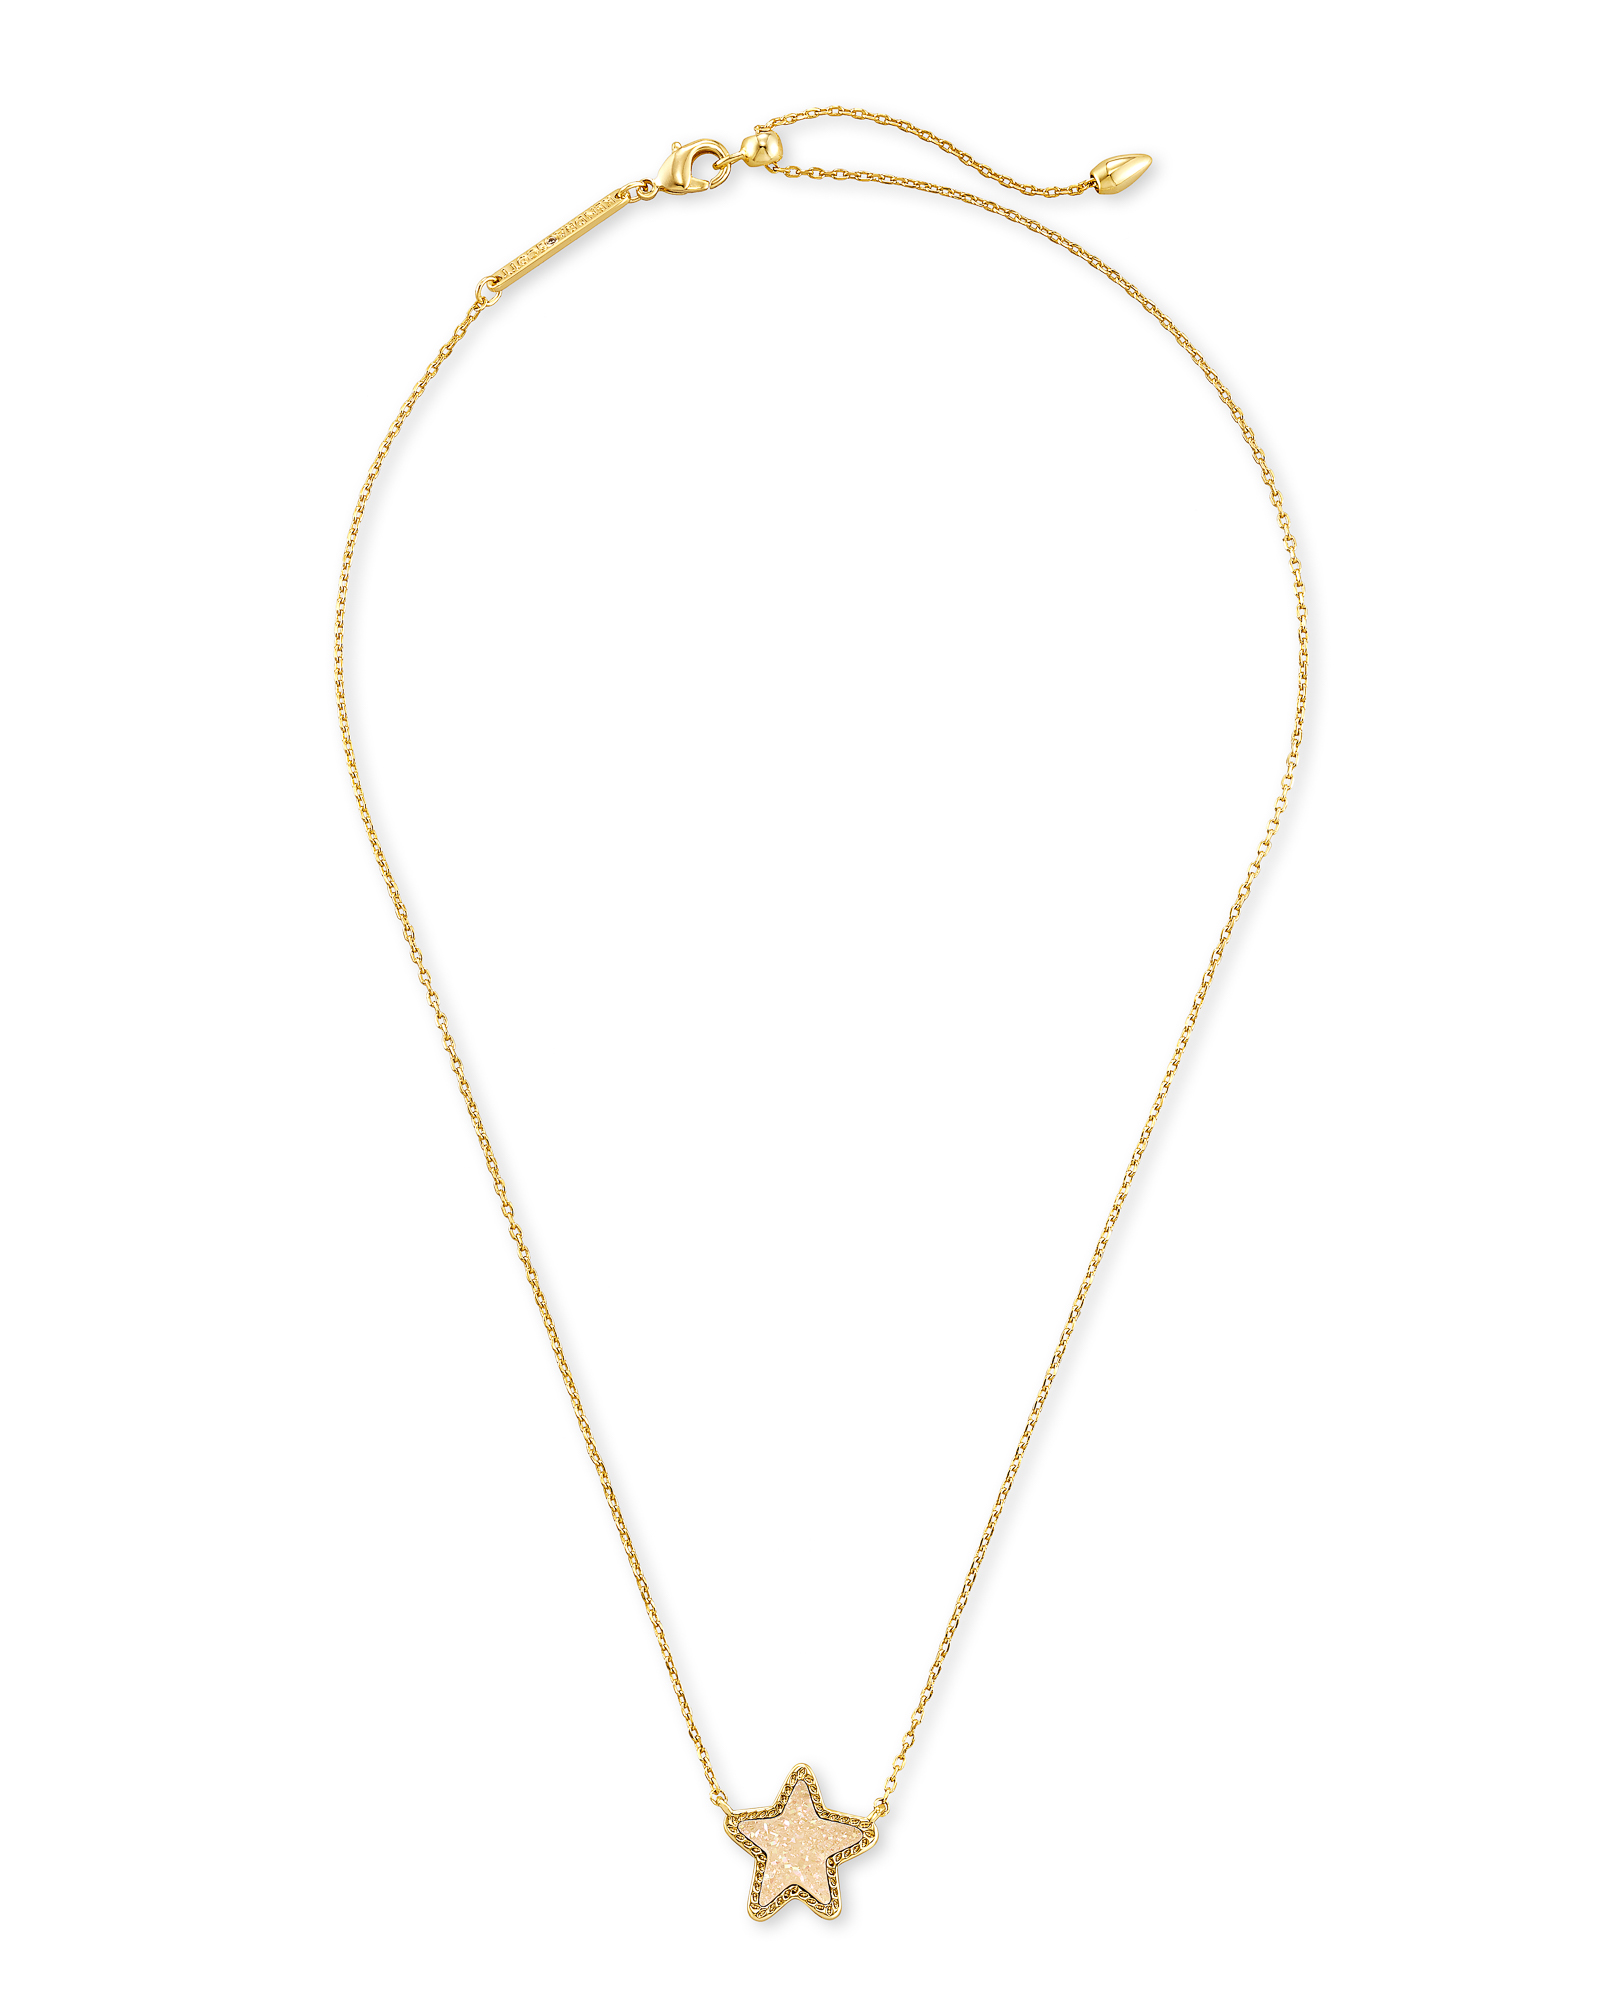 Jae Star Gold Pendant Necklace in Iridescent Drusy | Kendra Scott